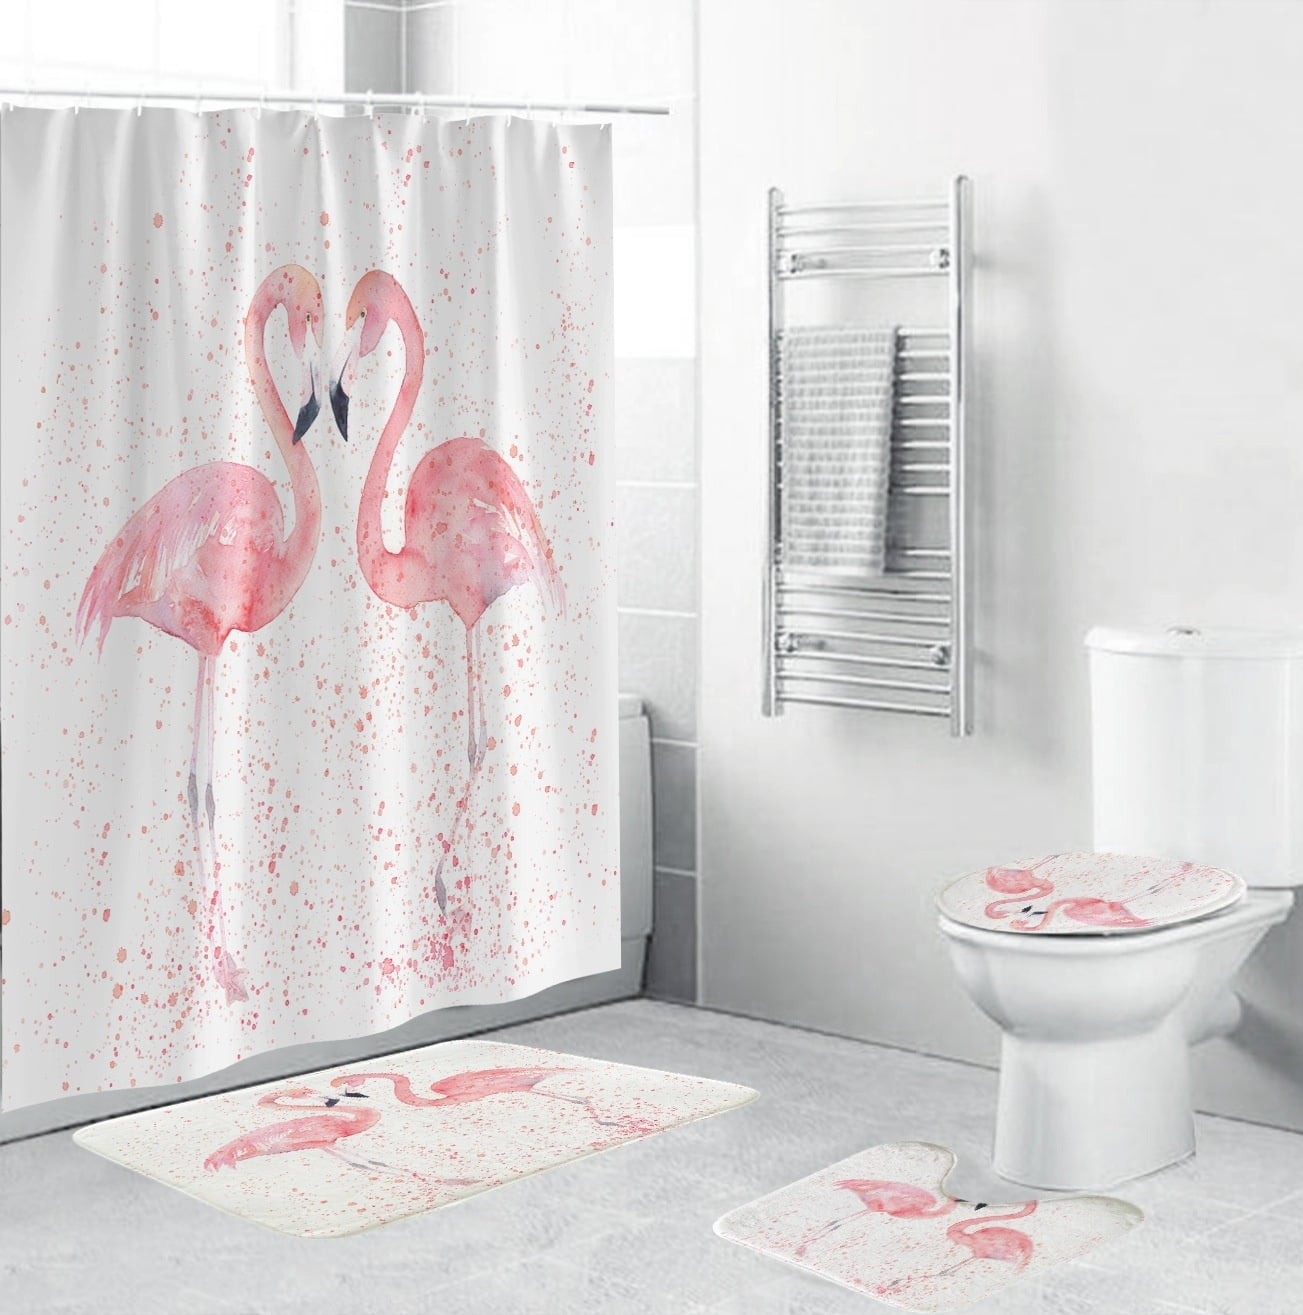 Flamingo Floral Style Bathroom Waterproof Fabric Shower Curtain Dekor 12 Hooks